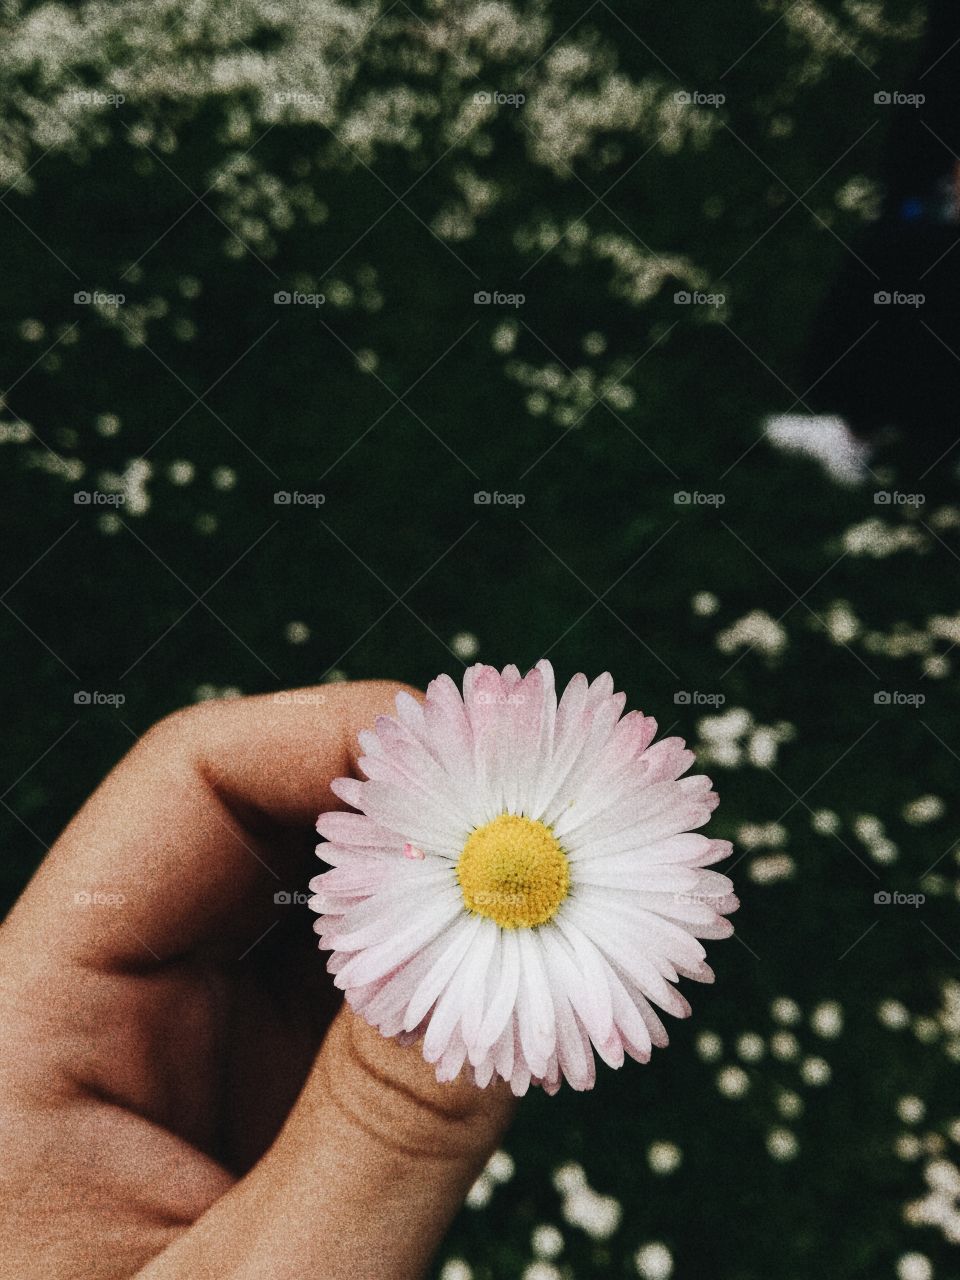 Grainy flower in focus